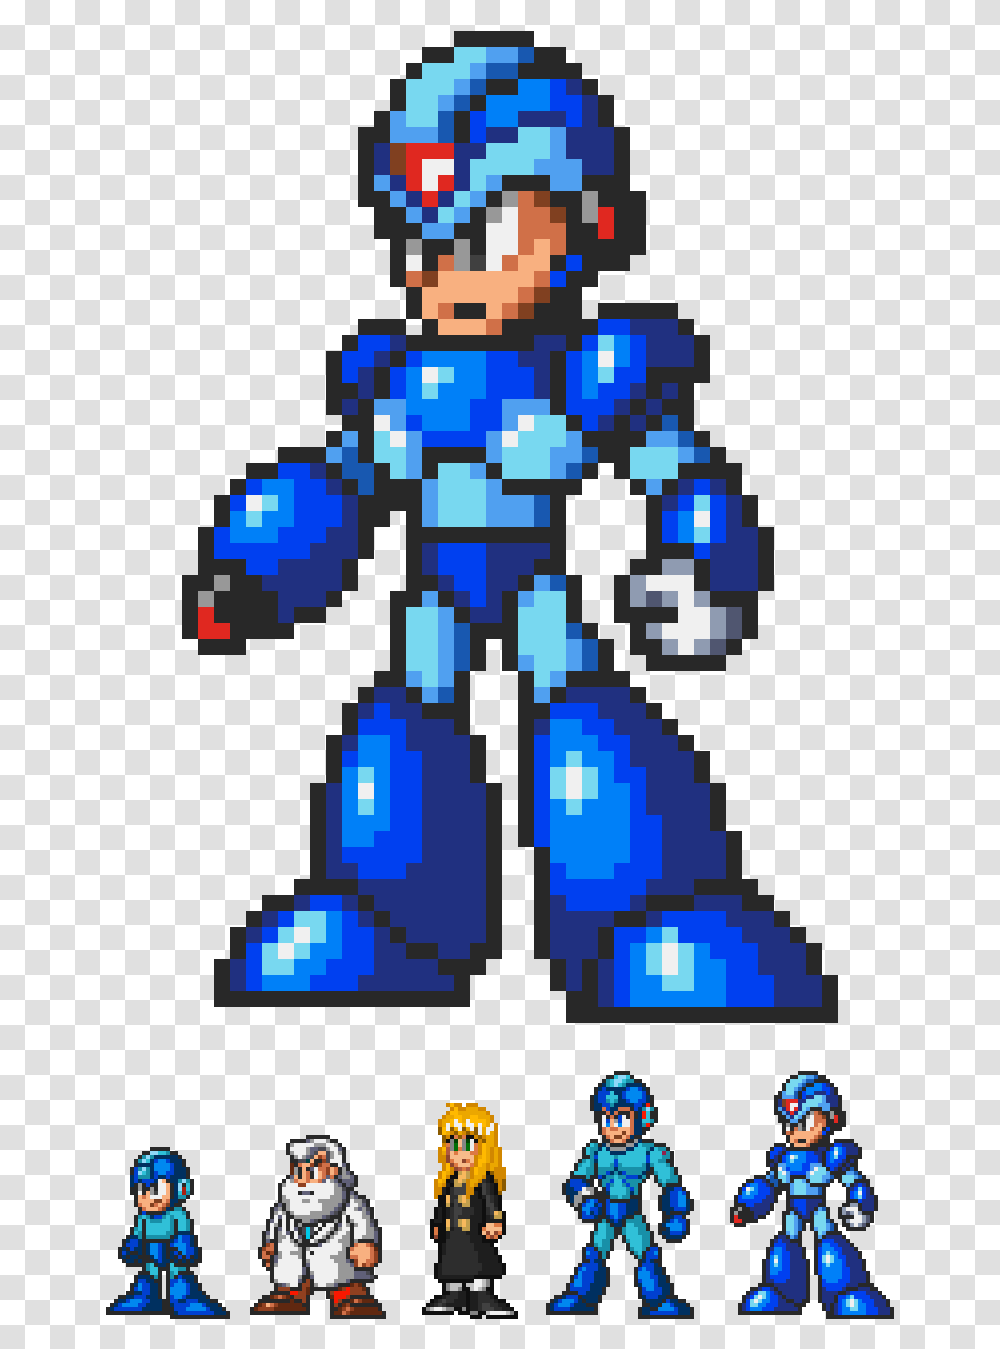 Image Result For Megaman X 32 Bits Sprites 32 Bit Mega Man X Sprite, Person, Human, Robot, Nutcracker Transparent Png